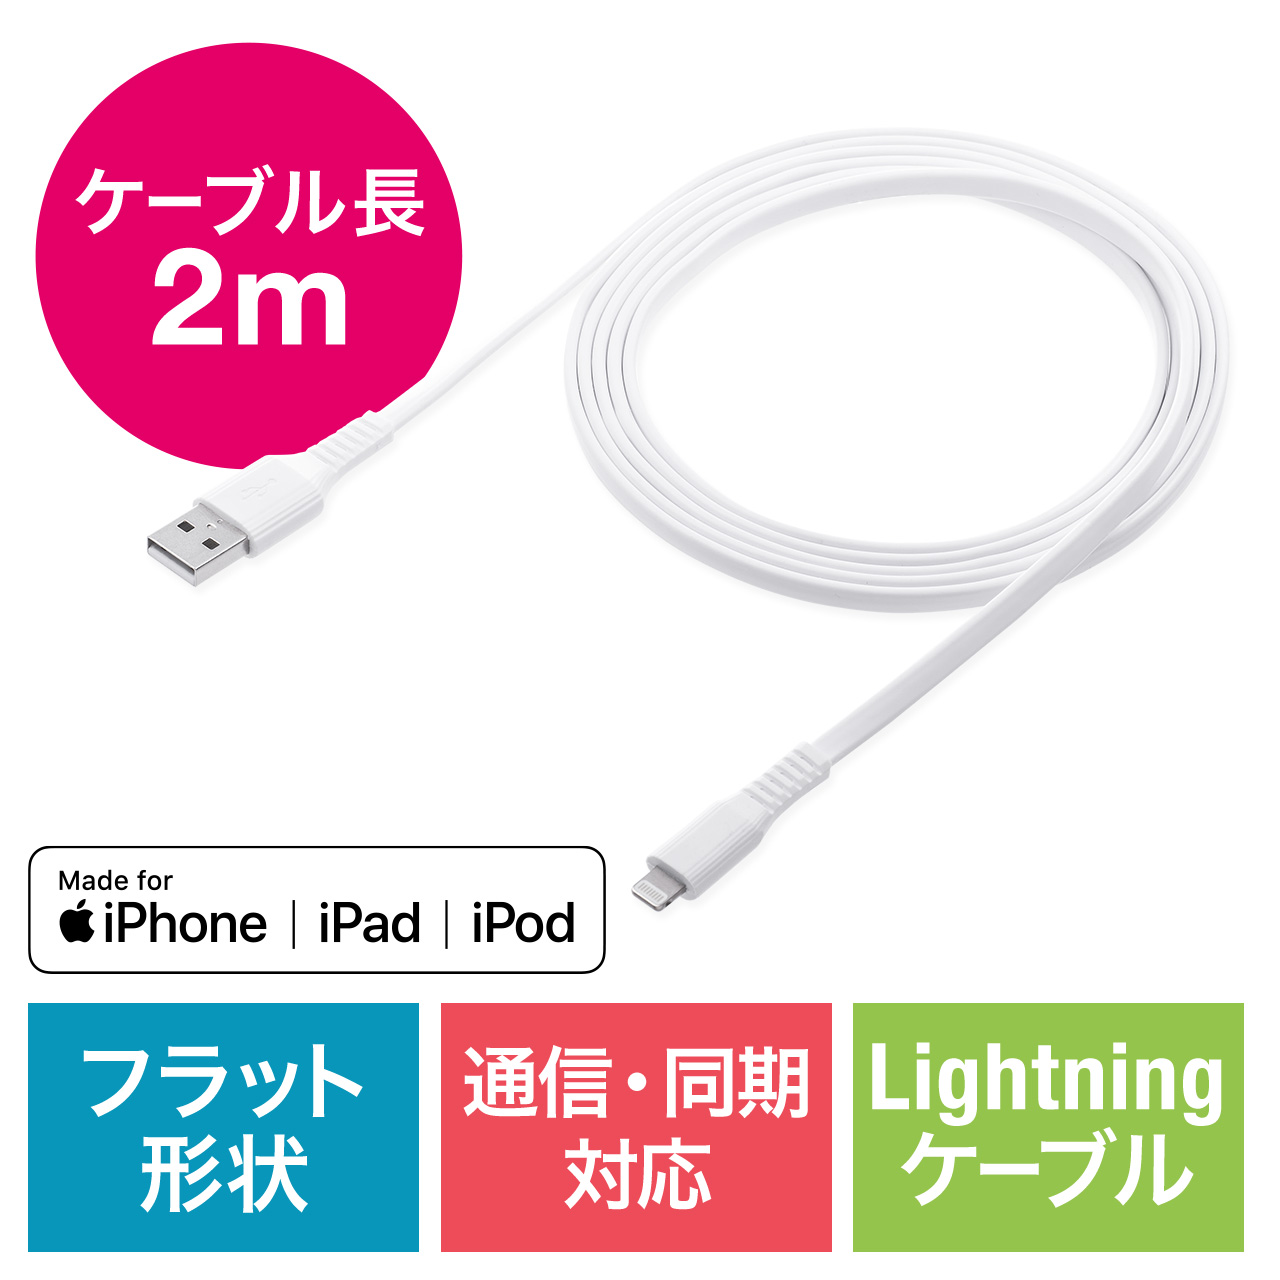 Lightningケーブル 2m 薄型 フラットケーブル iPhone iPad 充電ケーブル Apple MFi認証品 ホワイト  500-IPLM026WK